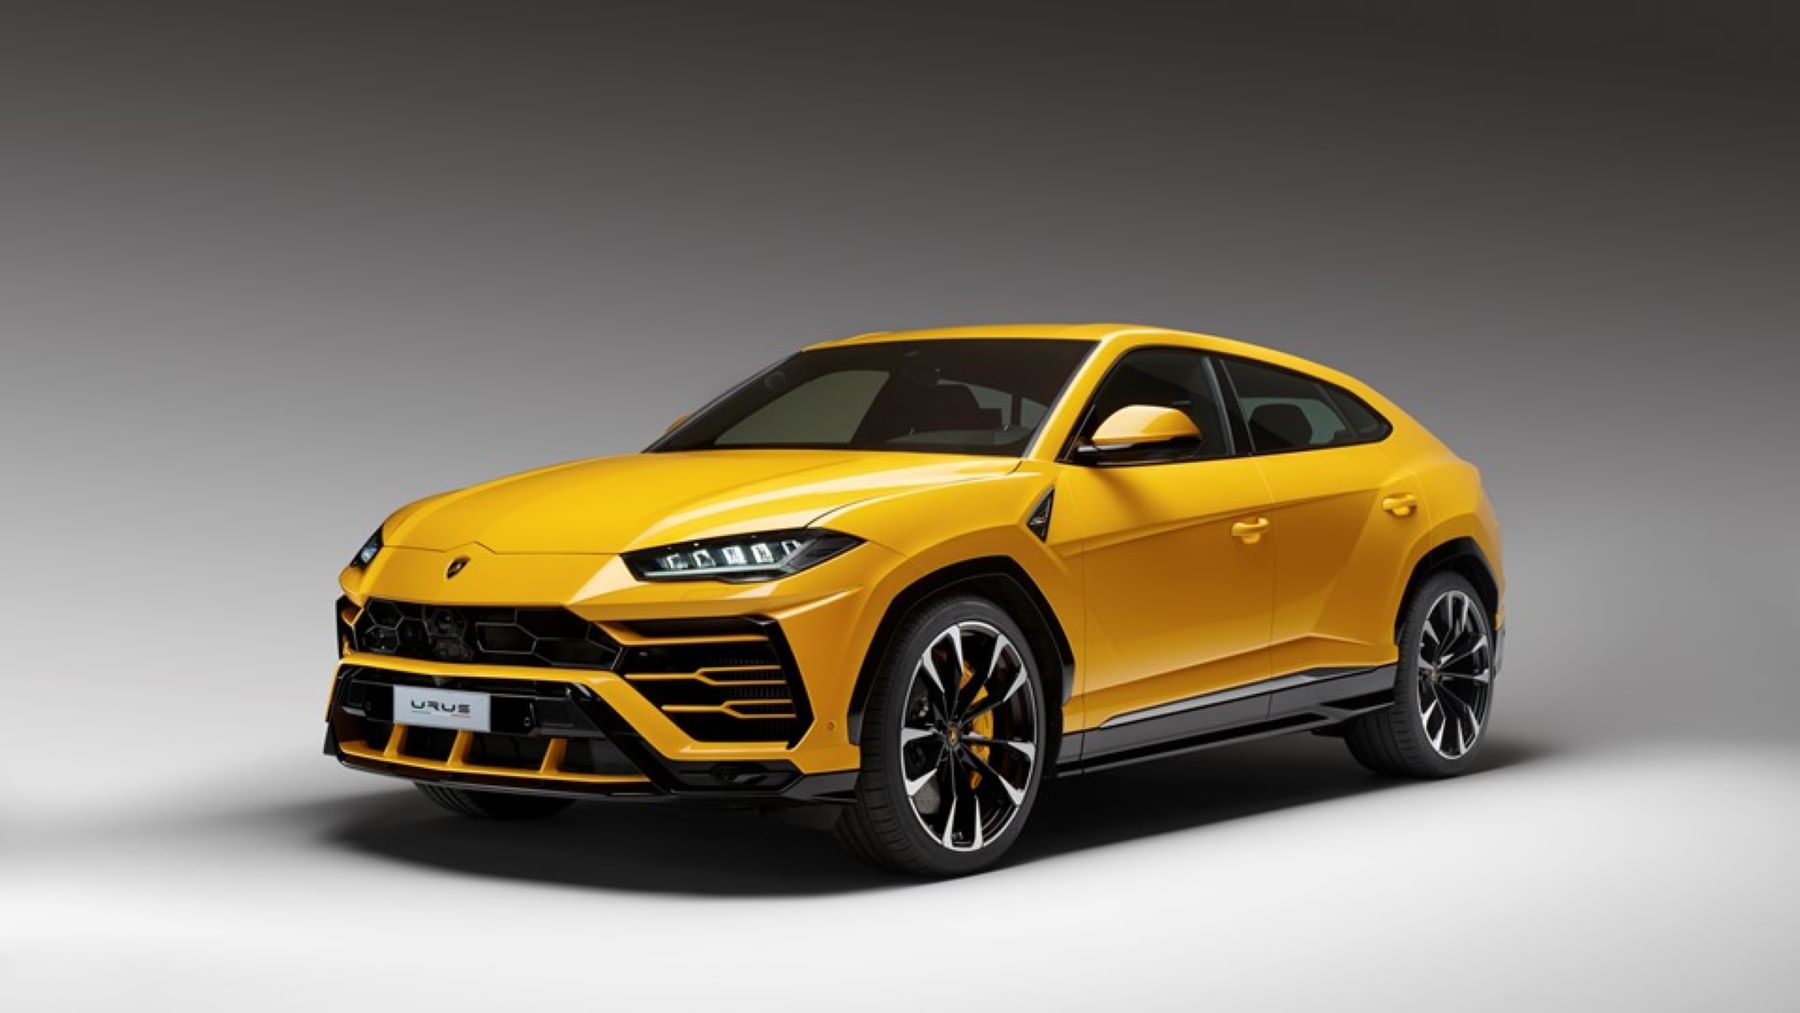 A rendering of a yellow Lamborghini Urus high-performance luxury SUV built through the company's online studio